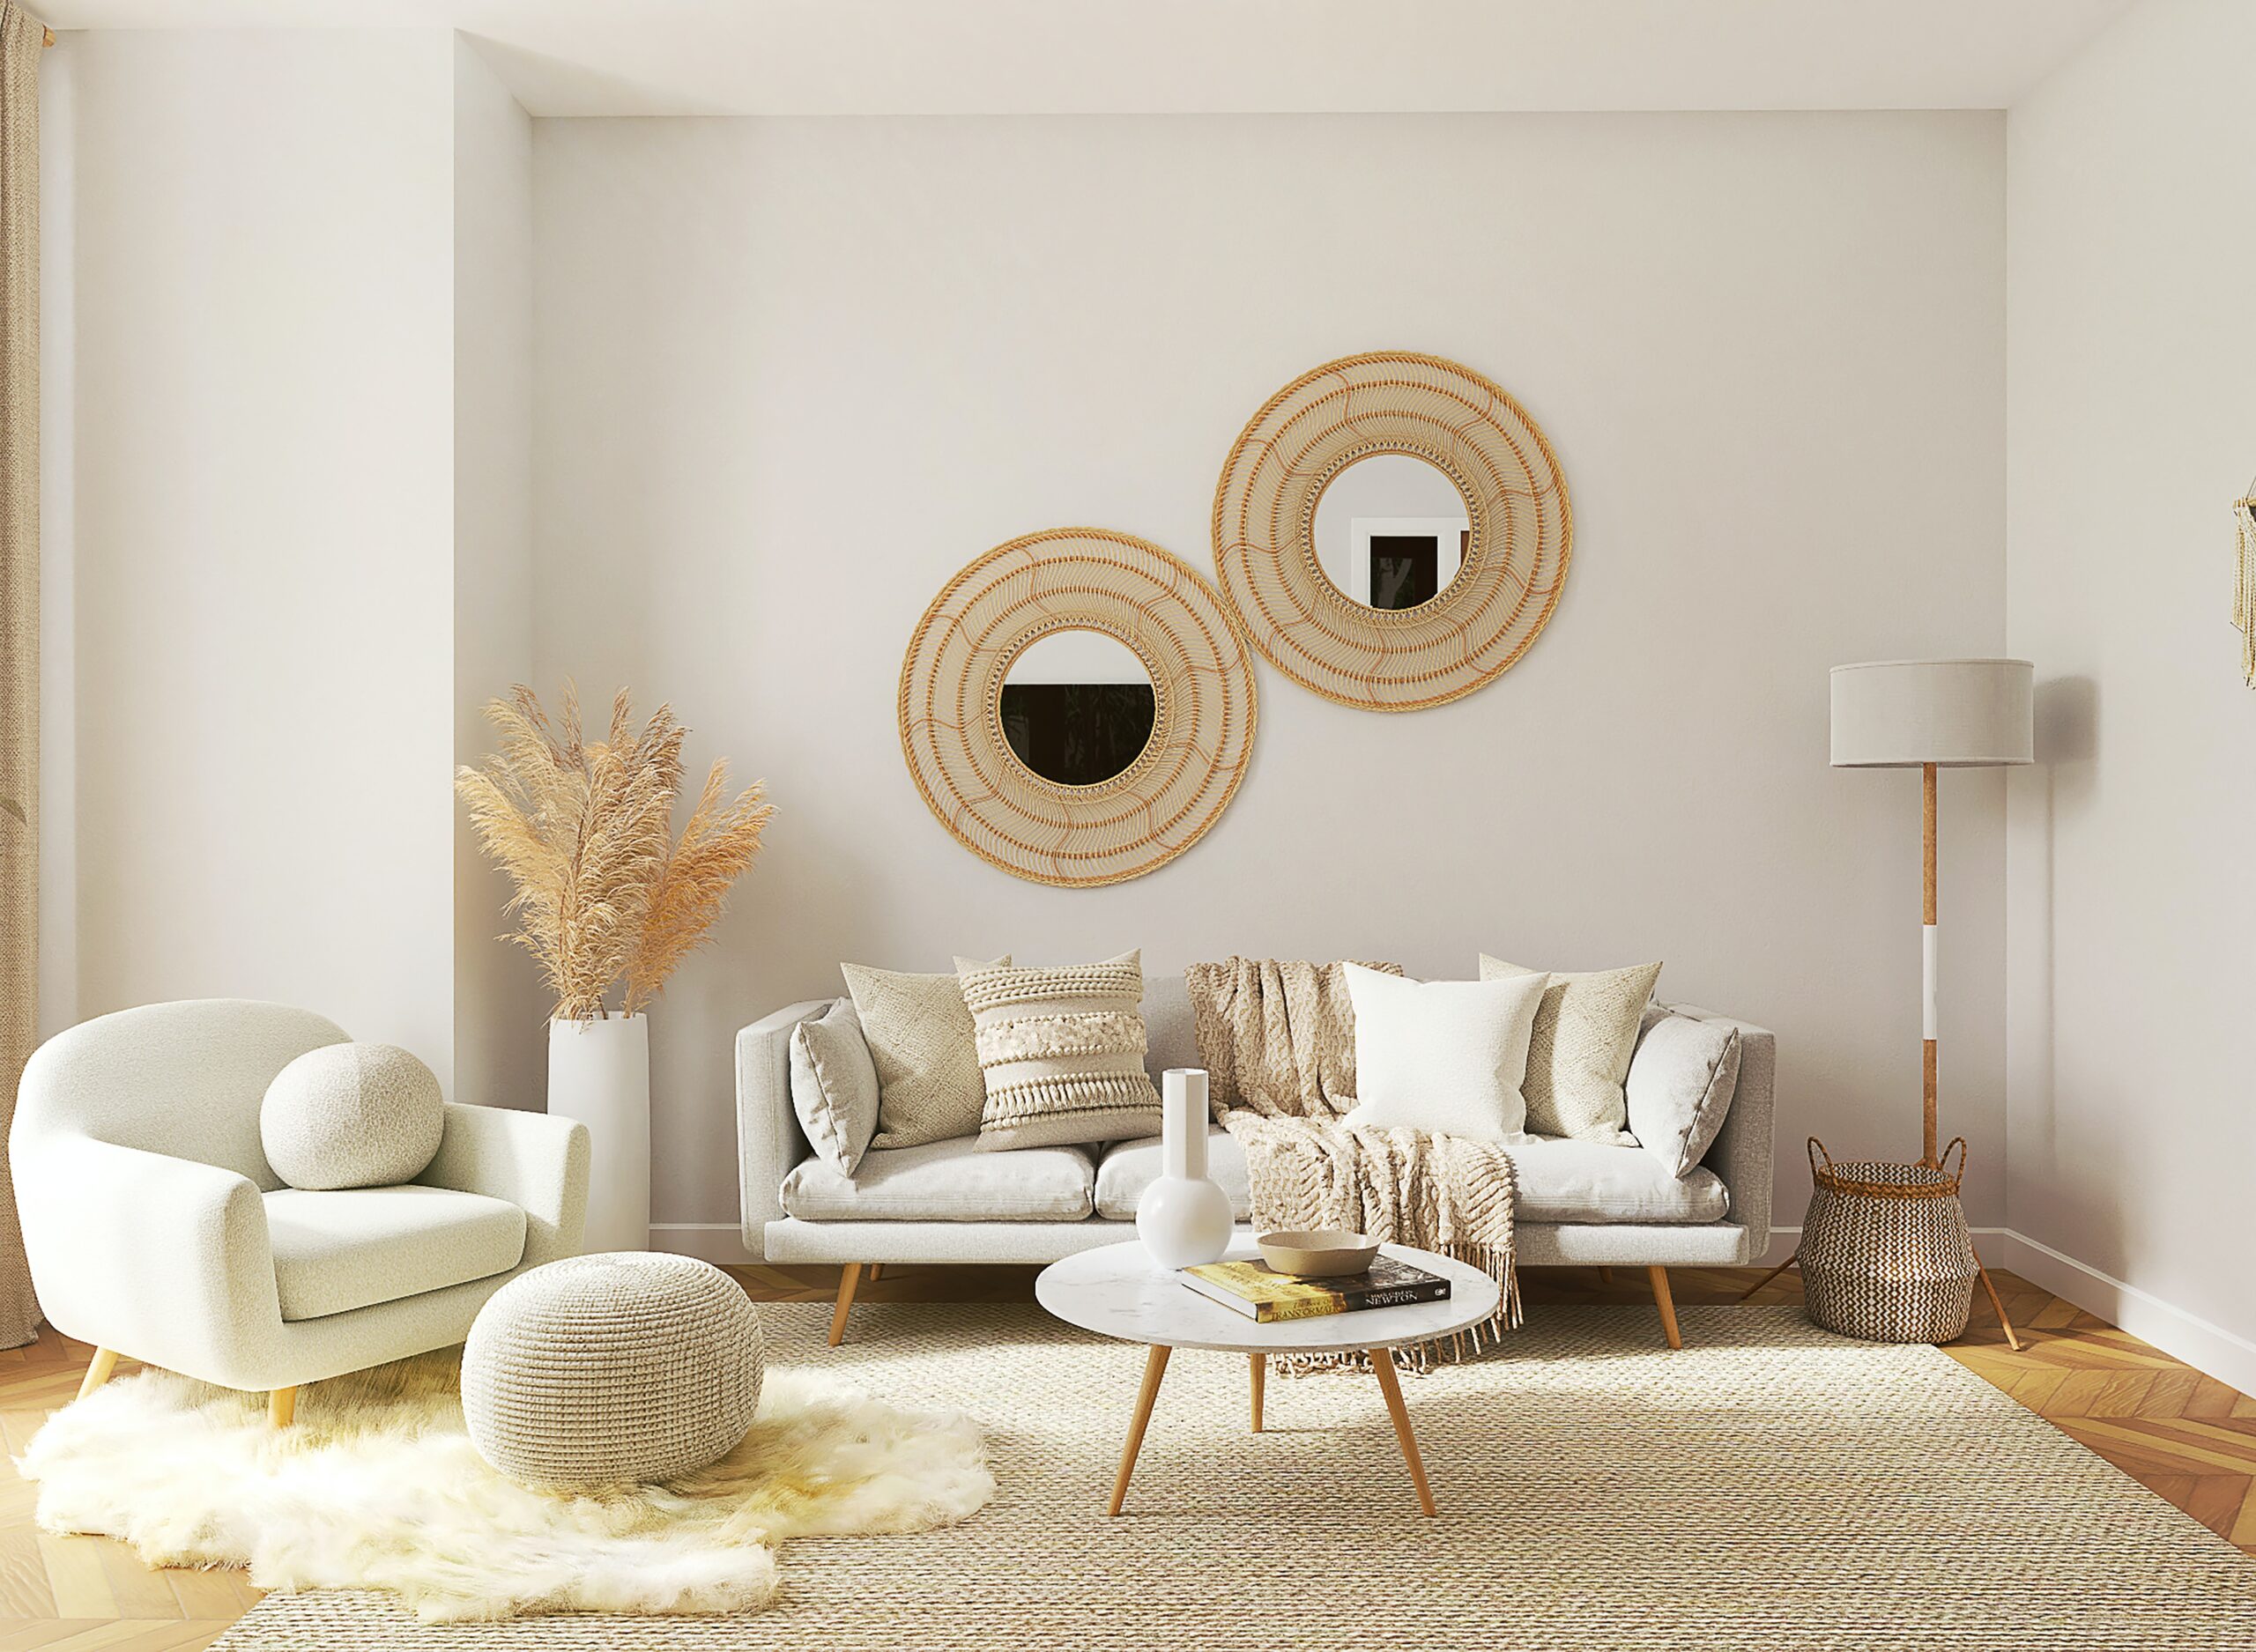 A living room in beige hues